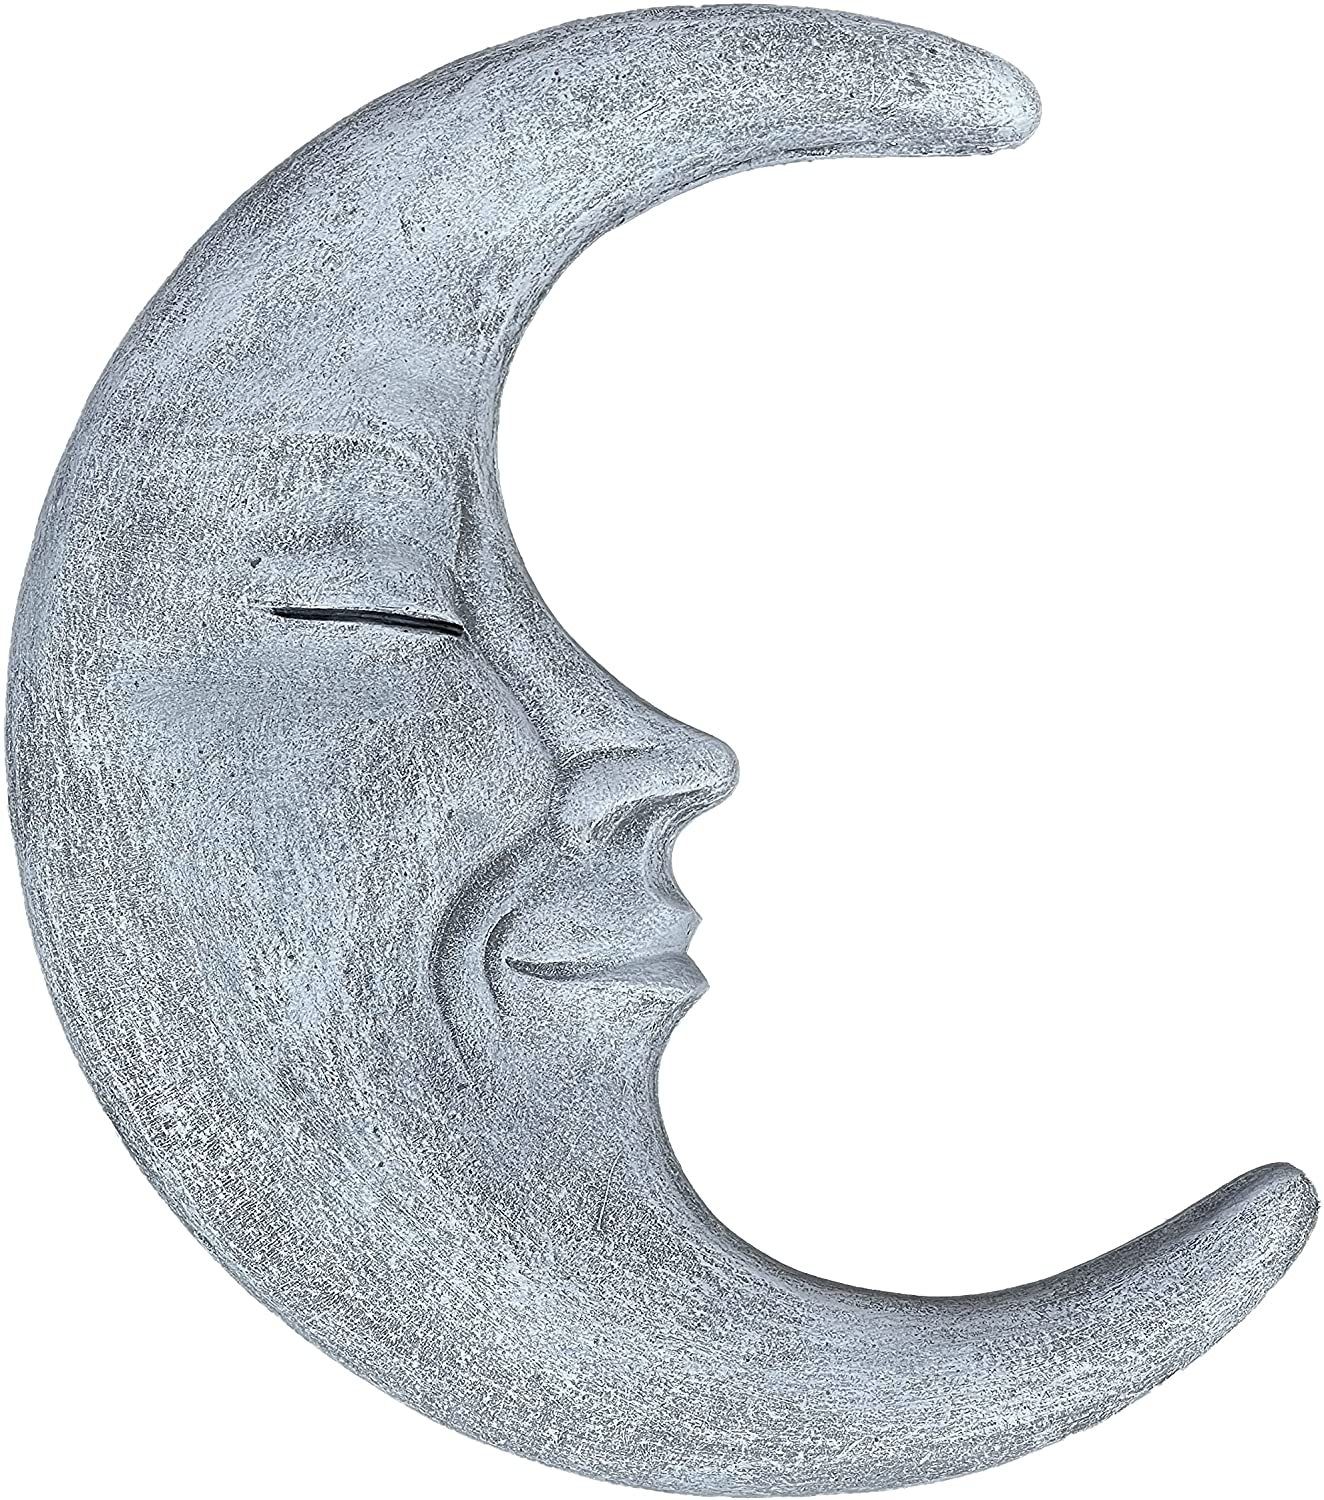 la " Mond luna and Steinfigur " Style Gartenfigur Stone Wandrelief